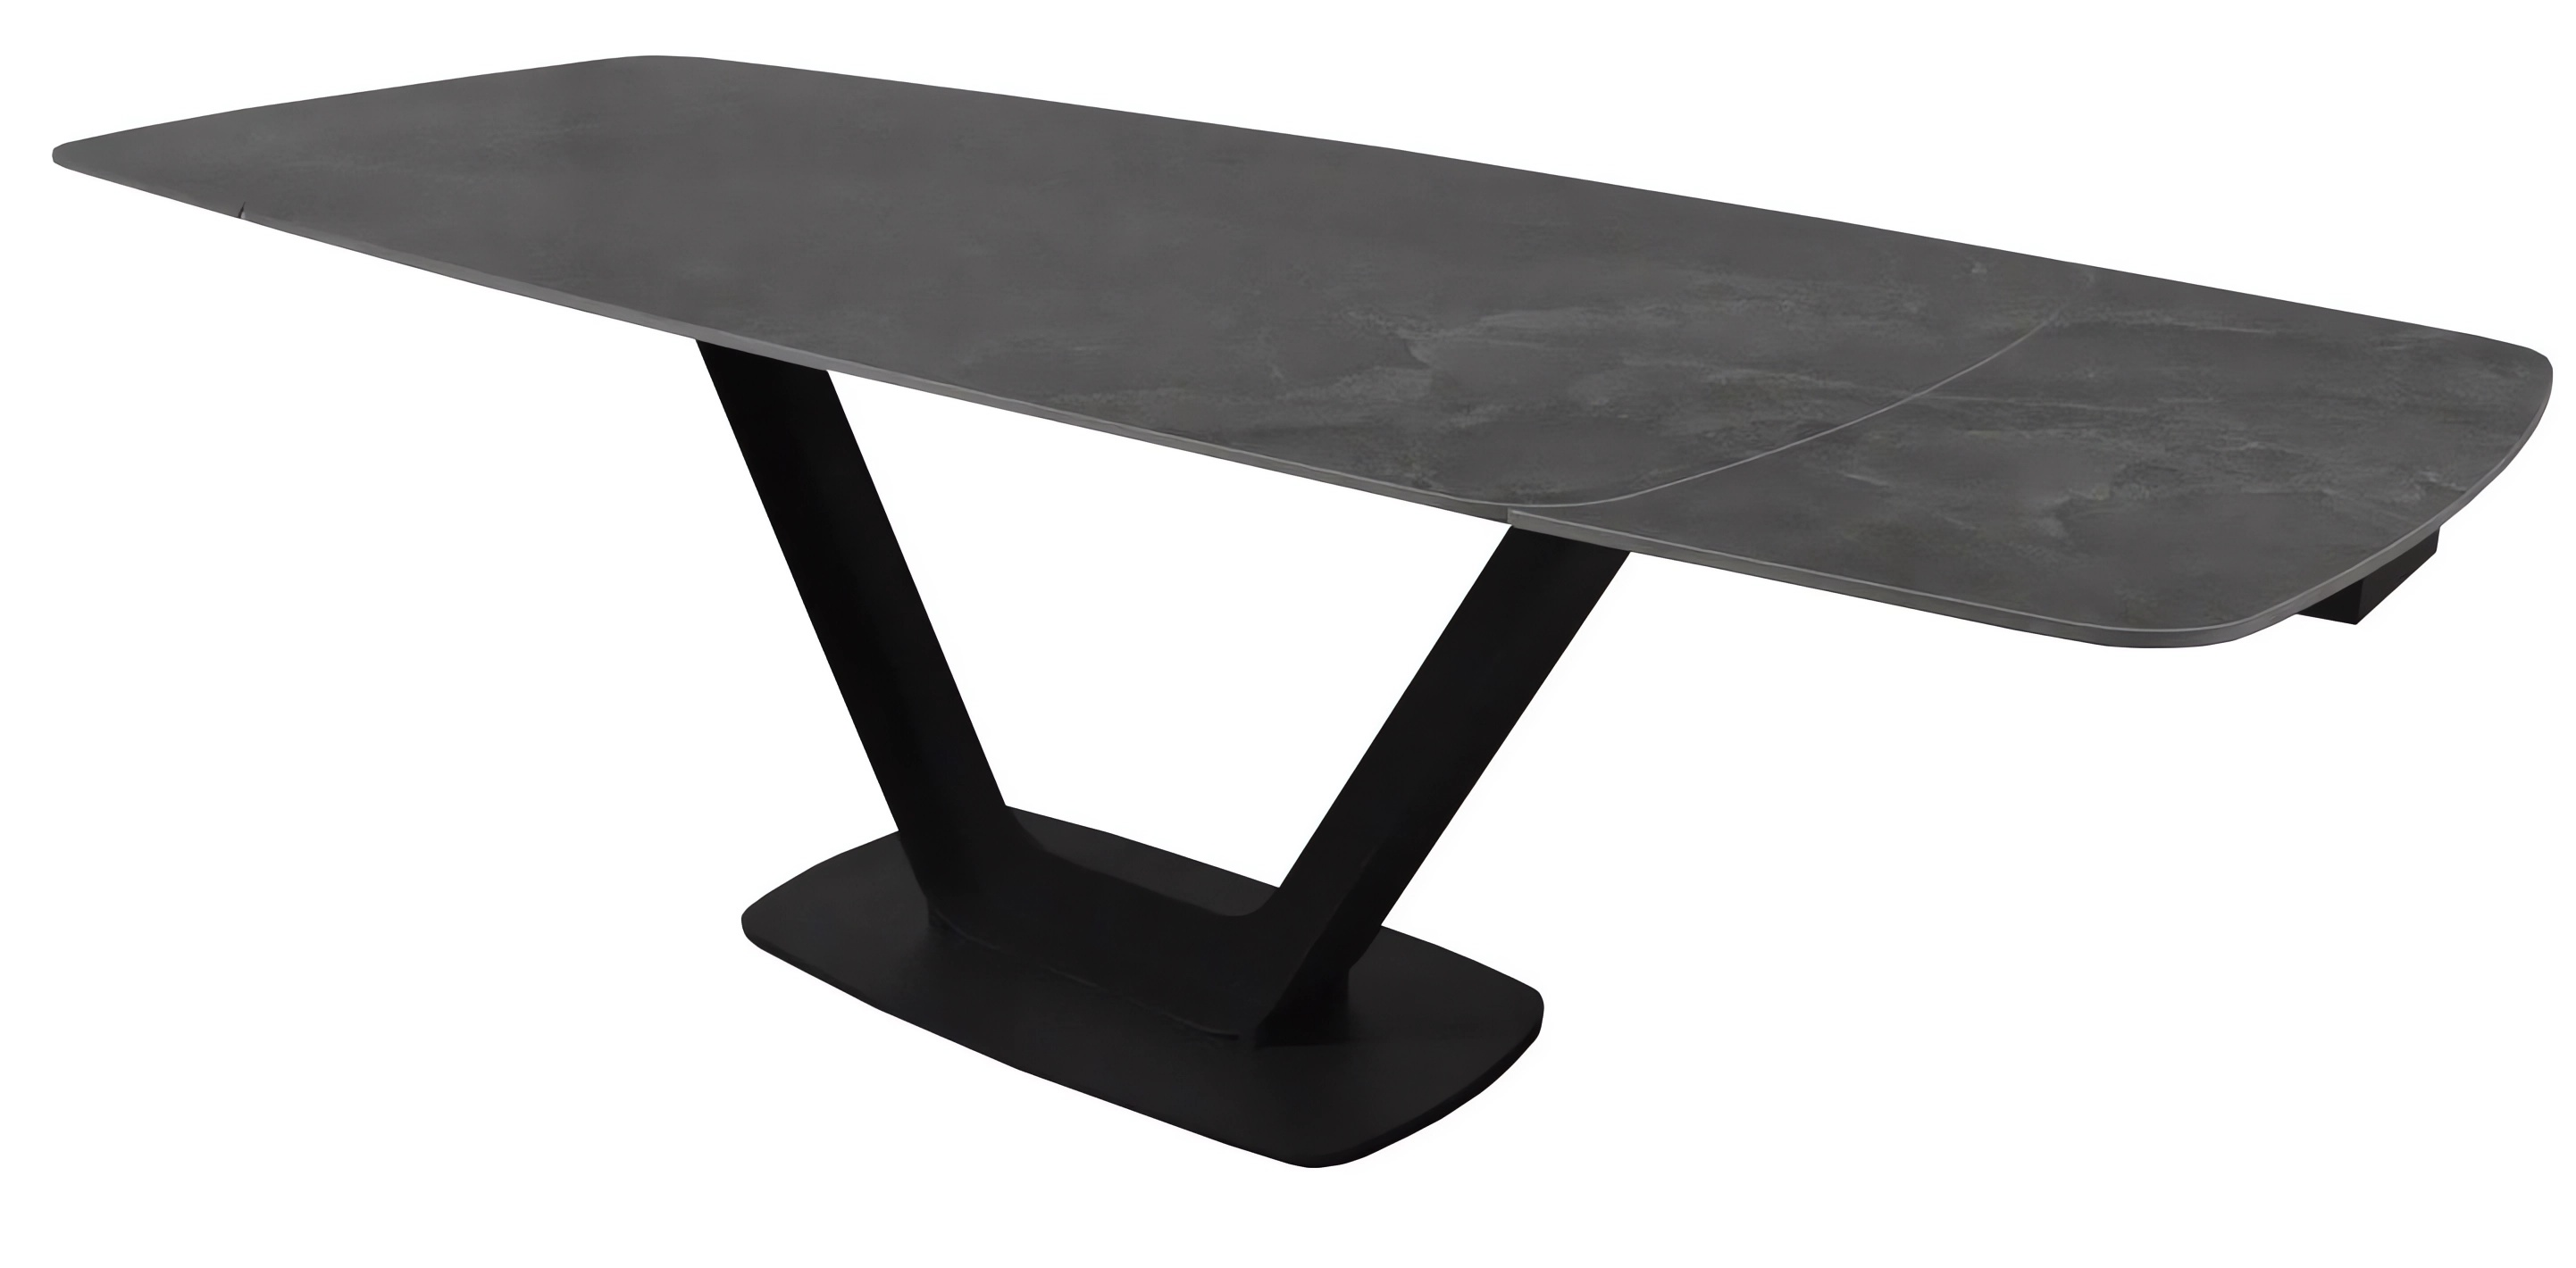 Force Dark Mystic Grey стол раскладной керамика 160-240 см Concepto